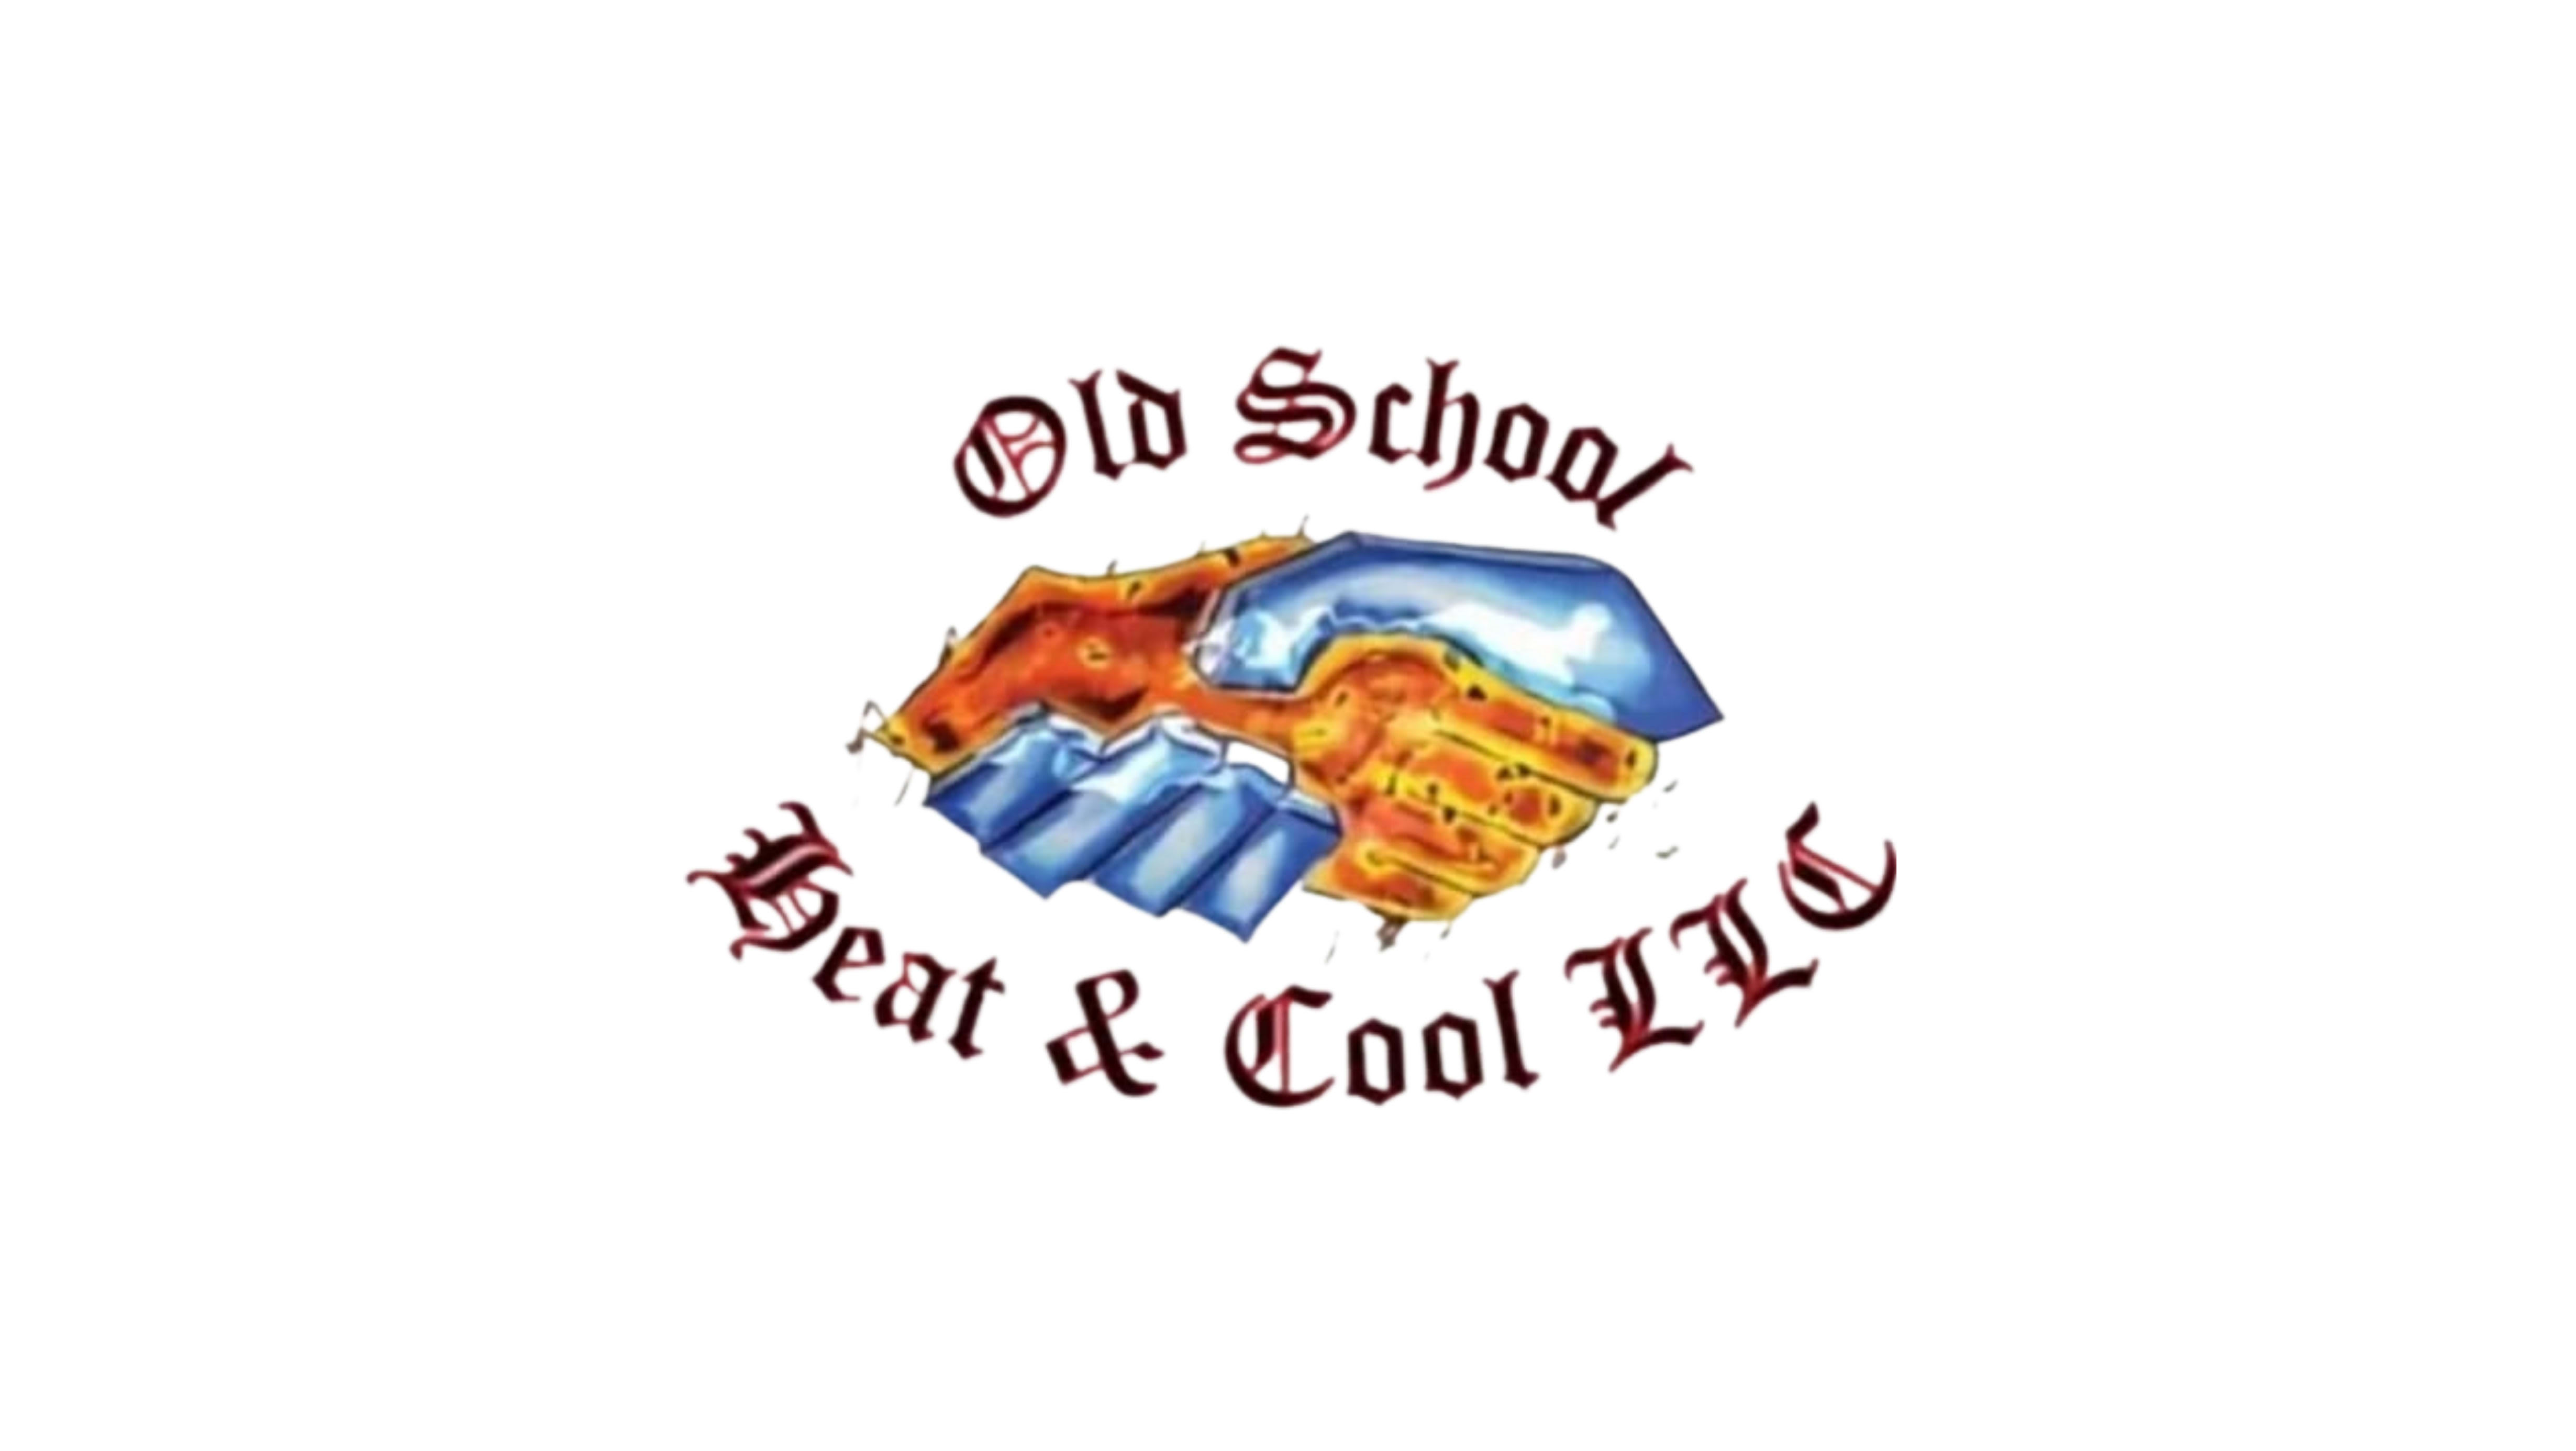 Old School Heat & Cool LLC